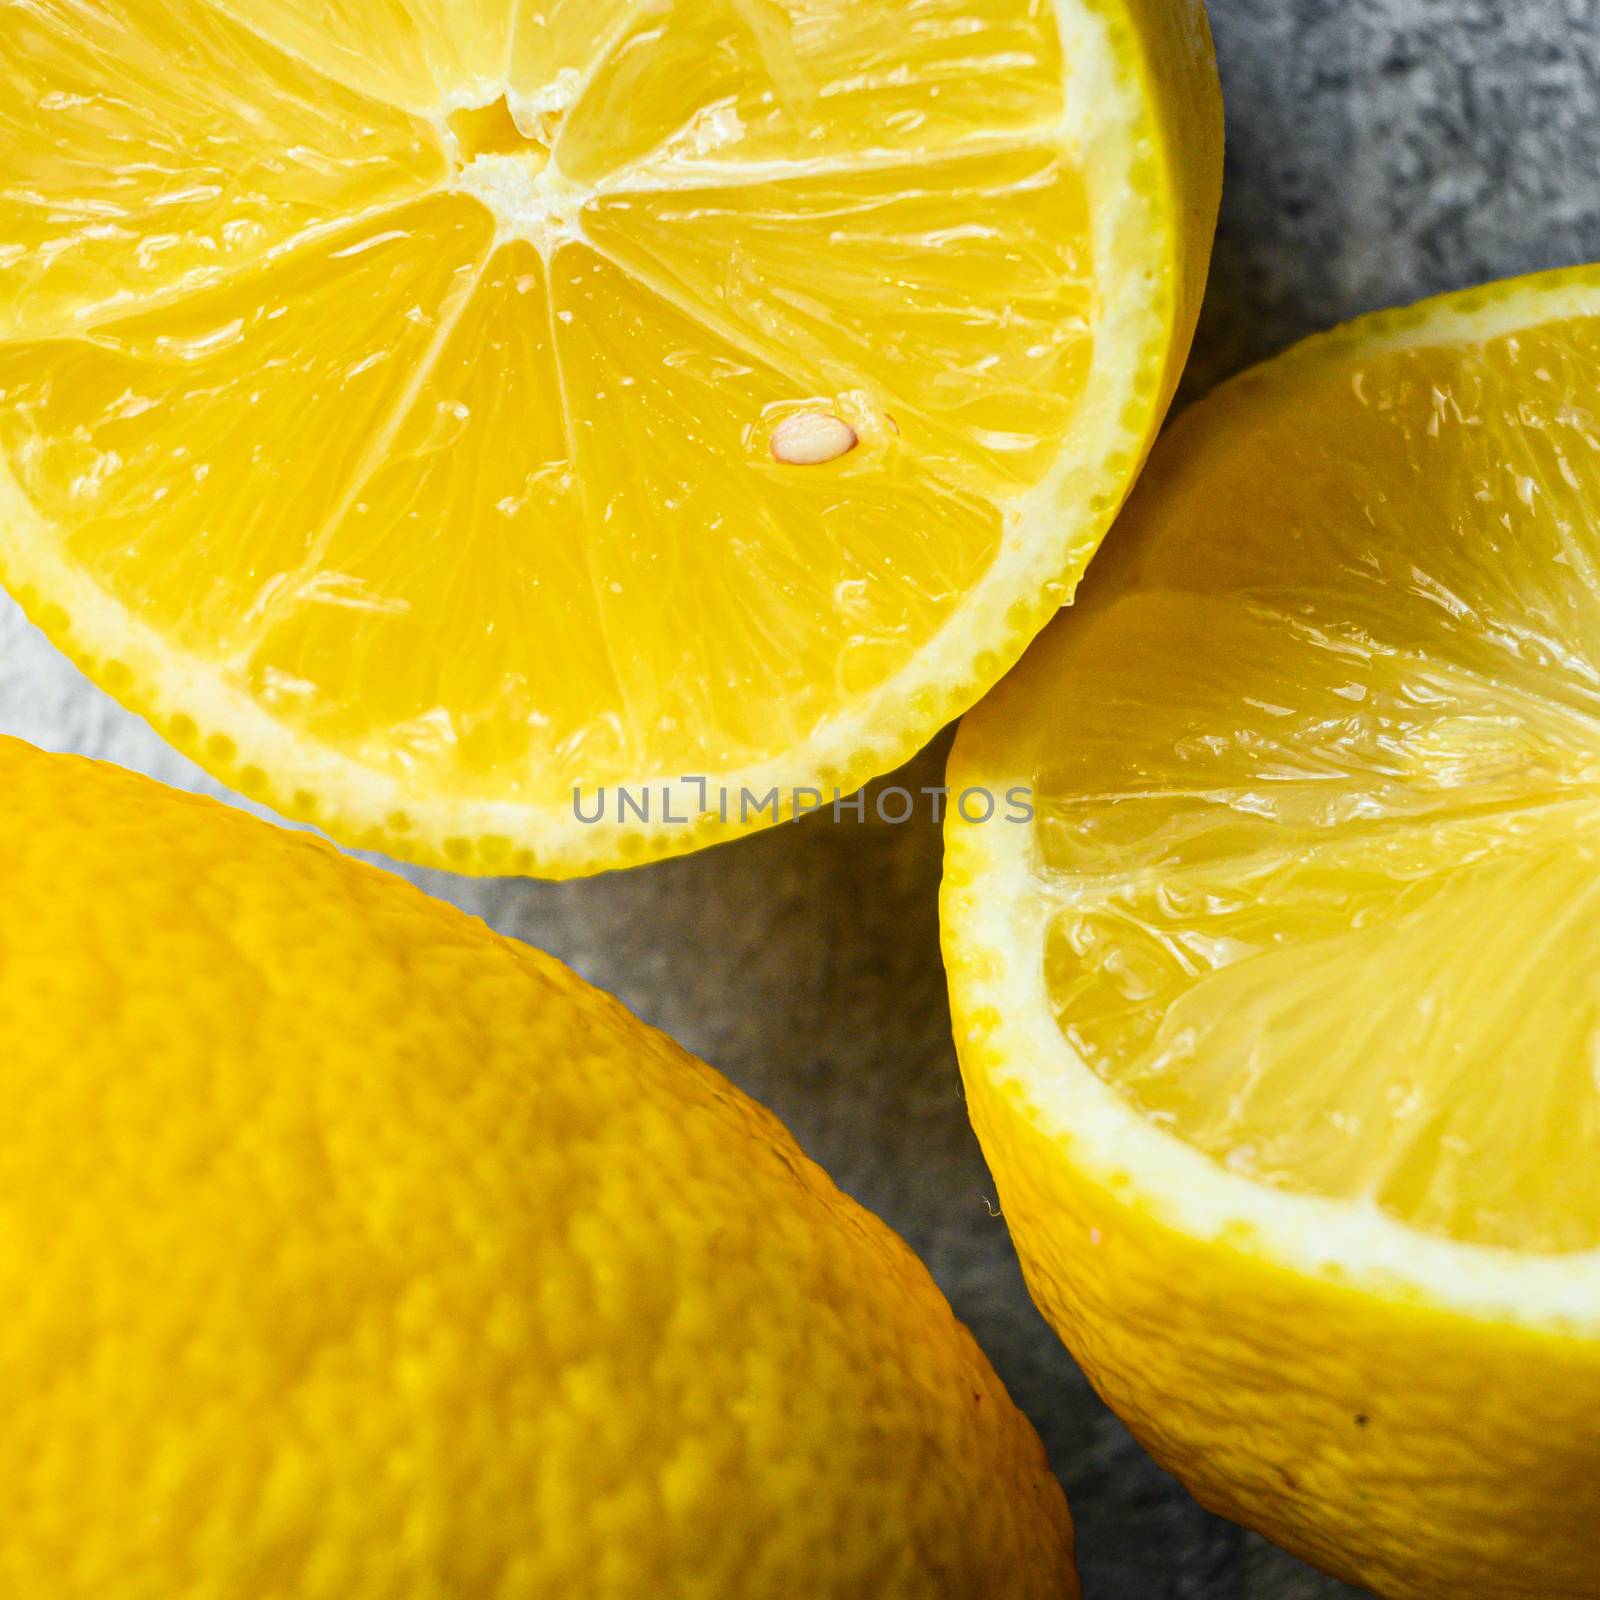 Ripe juicy Lemon curd closeup on gray background. Whole yellow lemon and lemon cut half, top view, vitamin c source.